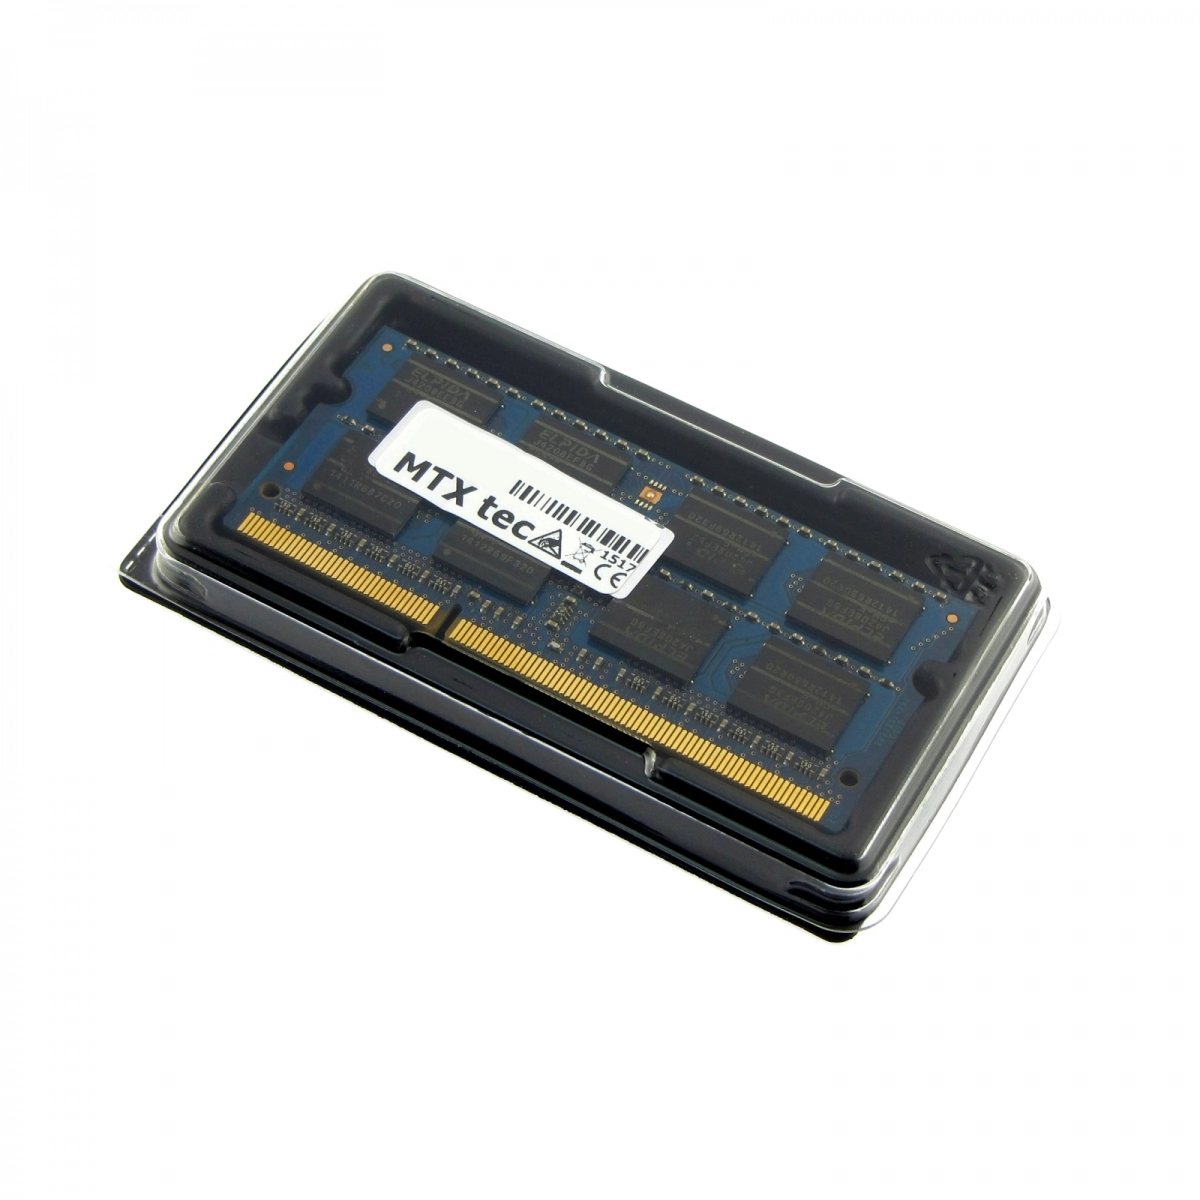 MTXtec Arbeitsspeicher 8 GB RAM für FUJITSU LifeBook E752